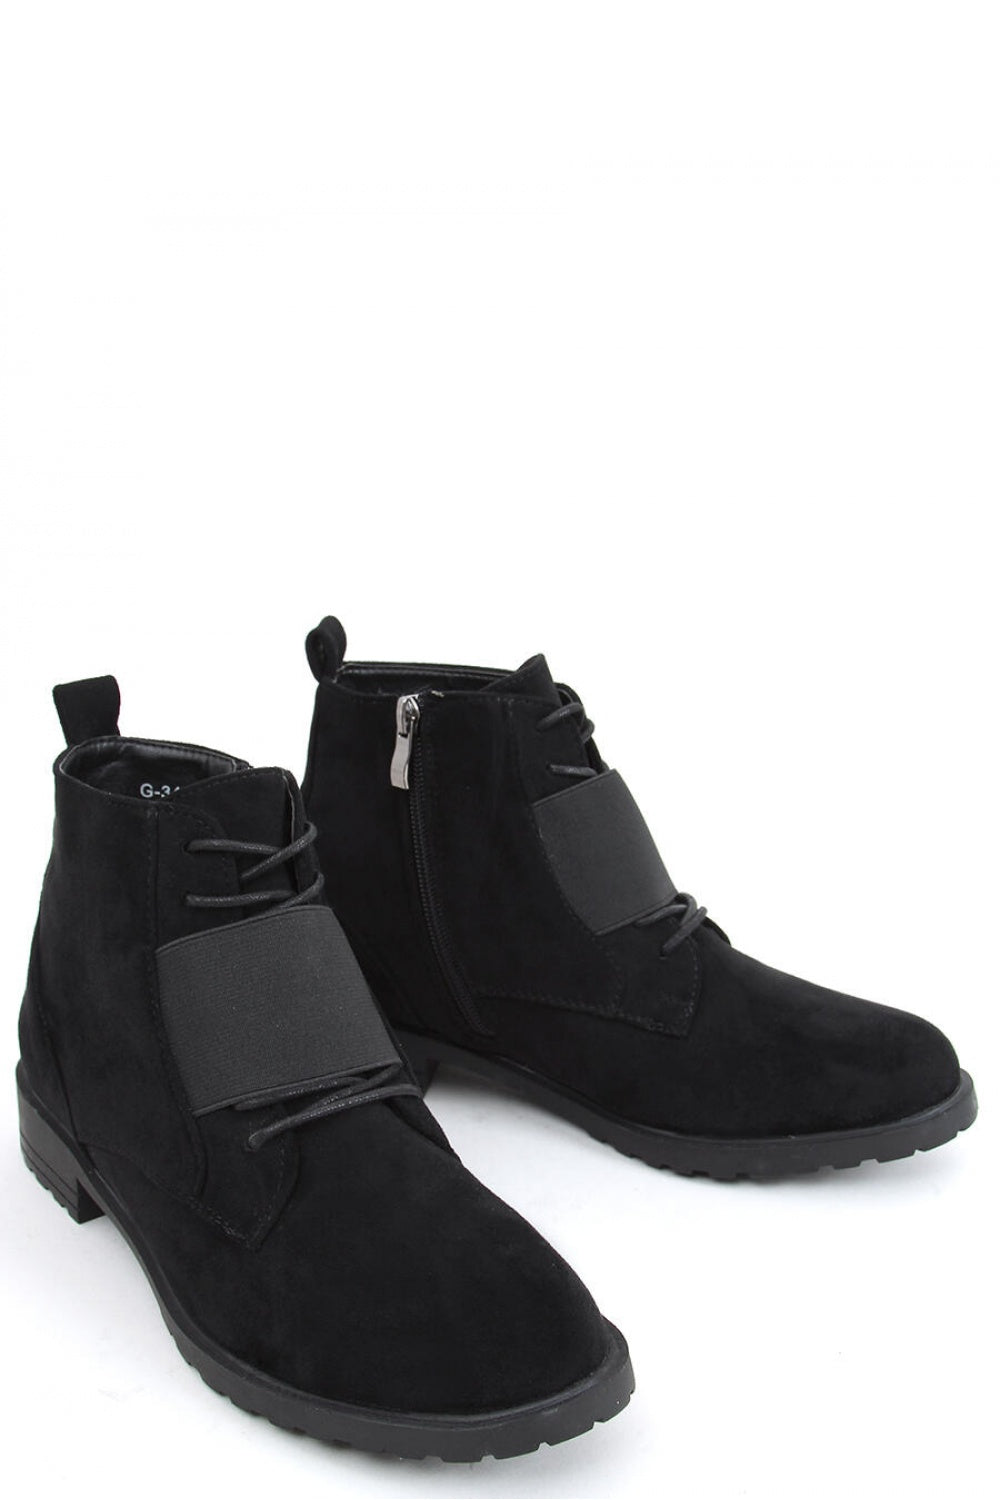 Boots model 160275 Inello Posh Styles Apparel